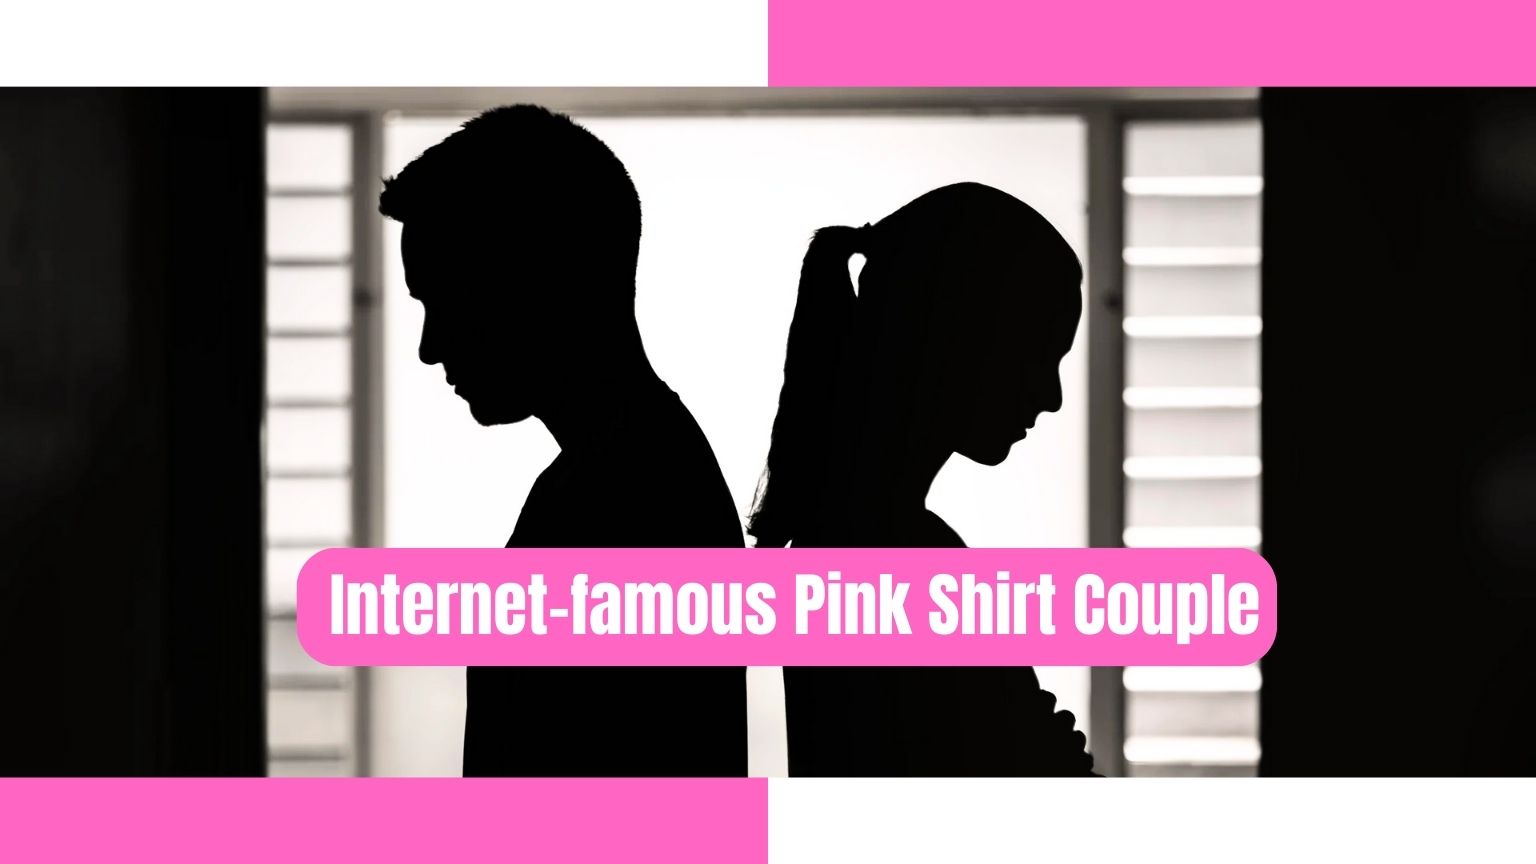 Internet-famous Pink Shirt Couple